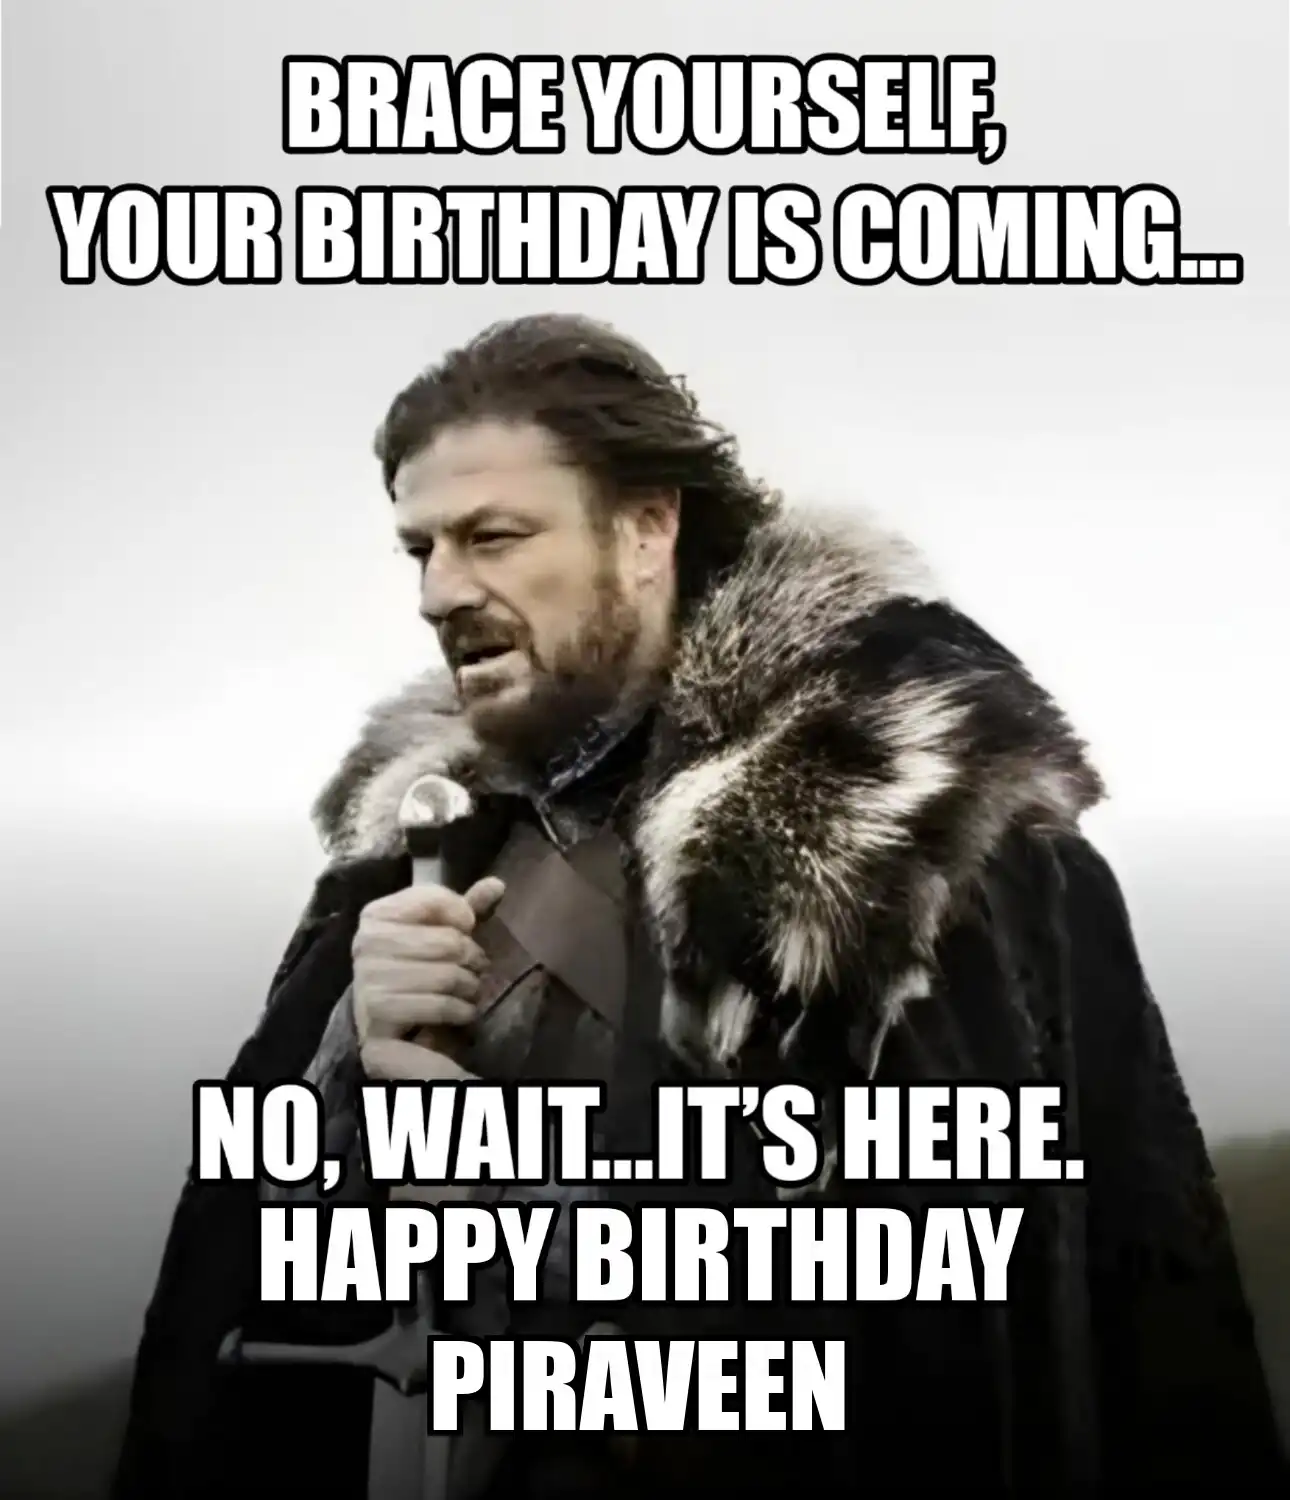 Happy Birthday Piraveen Brace Yourself Your Birthday Is Coming Meme